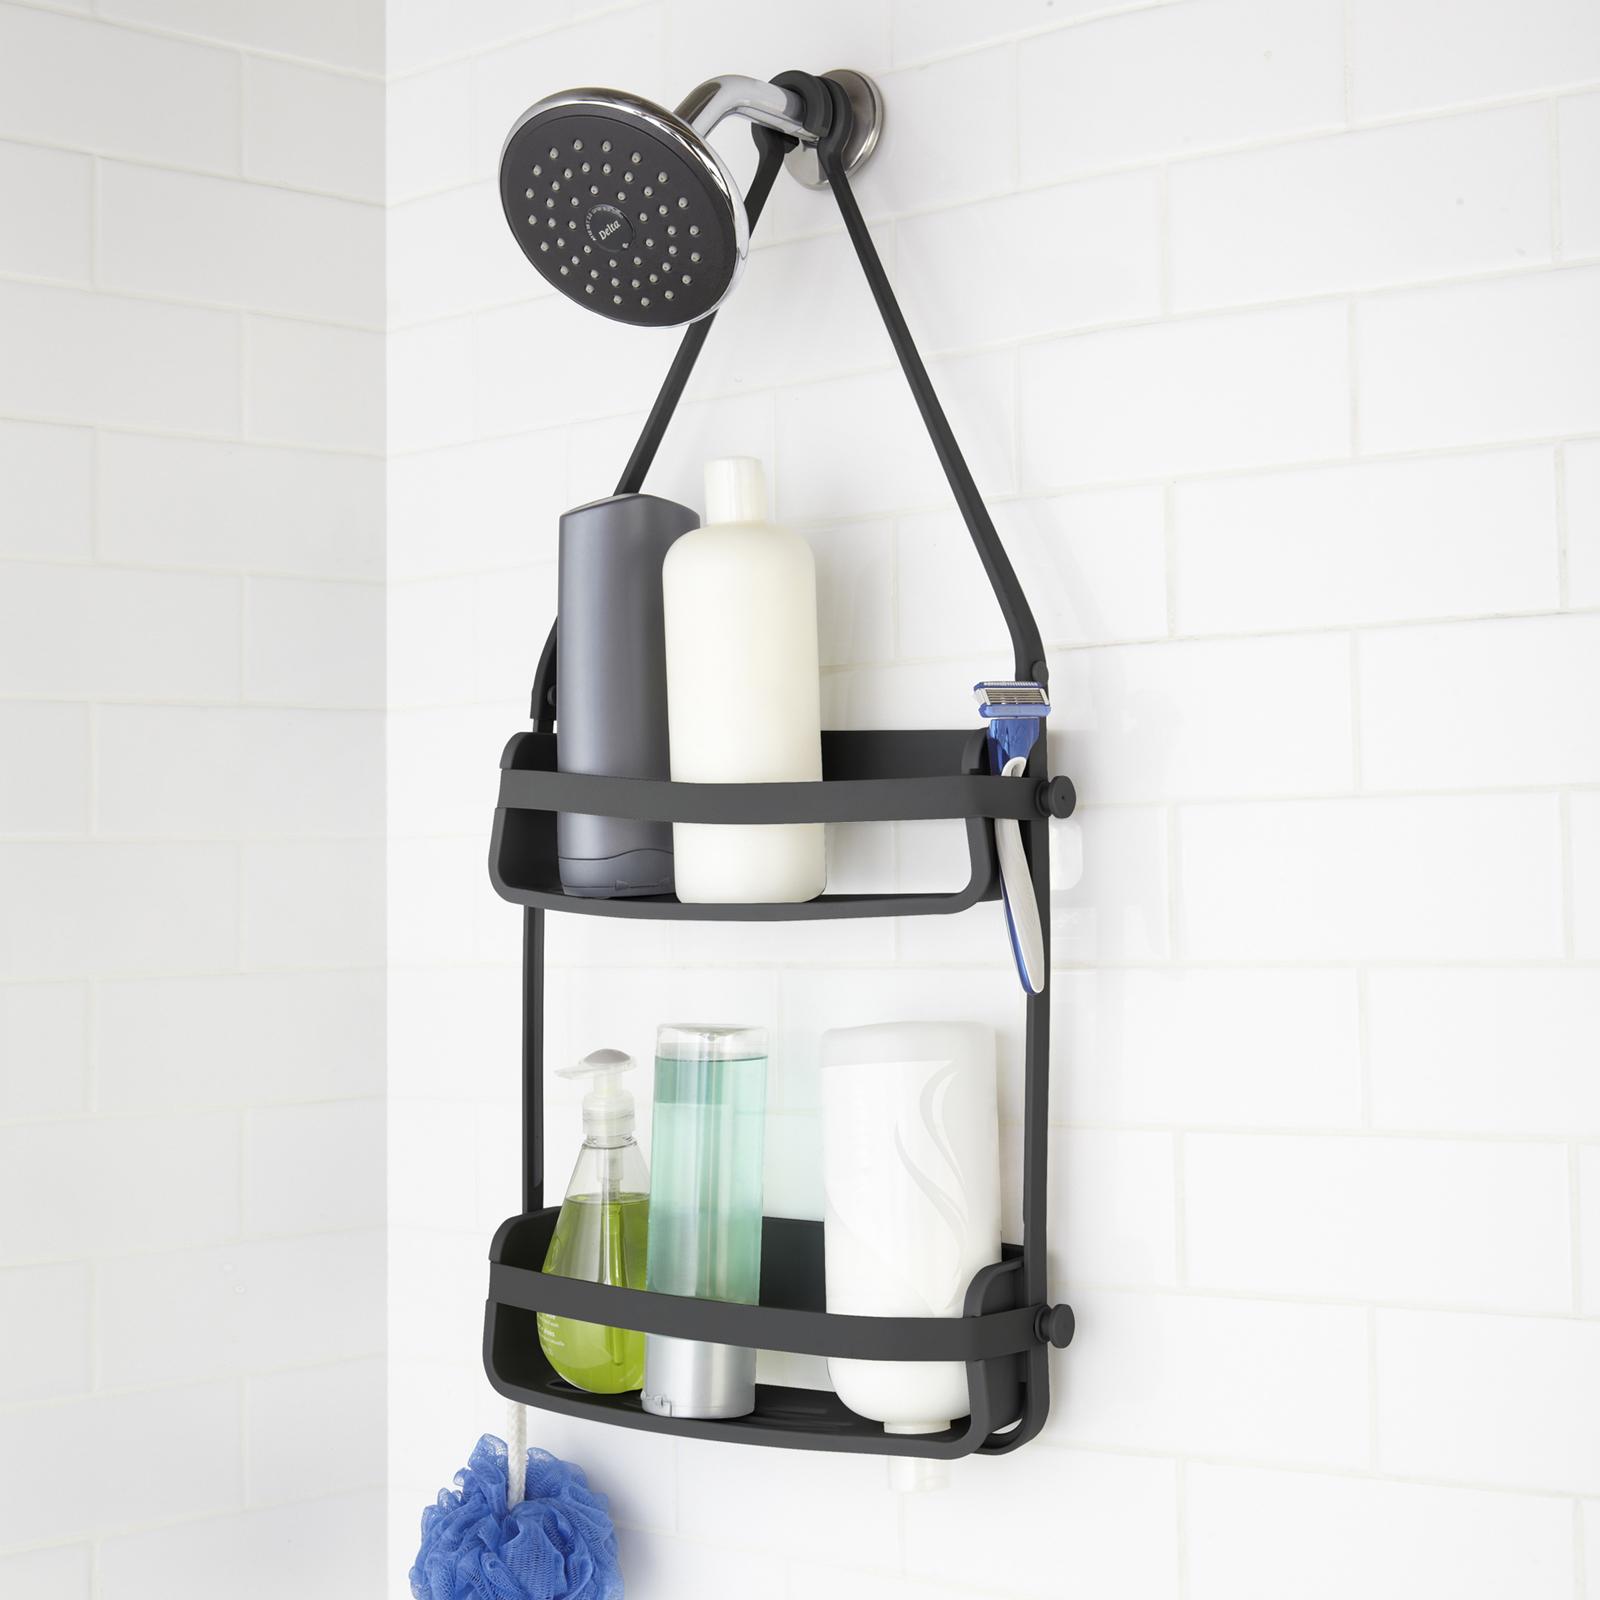 Umbra Flex Hanging Shower Caddy, Bathtub Shelf and Bathroom Organizer, White